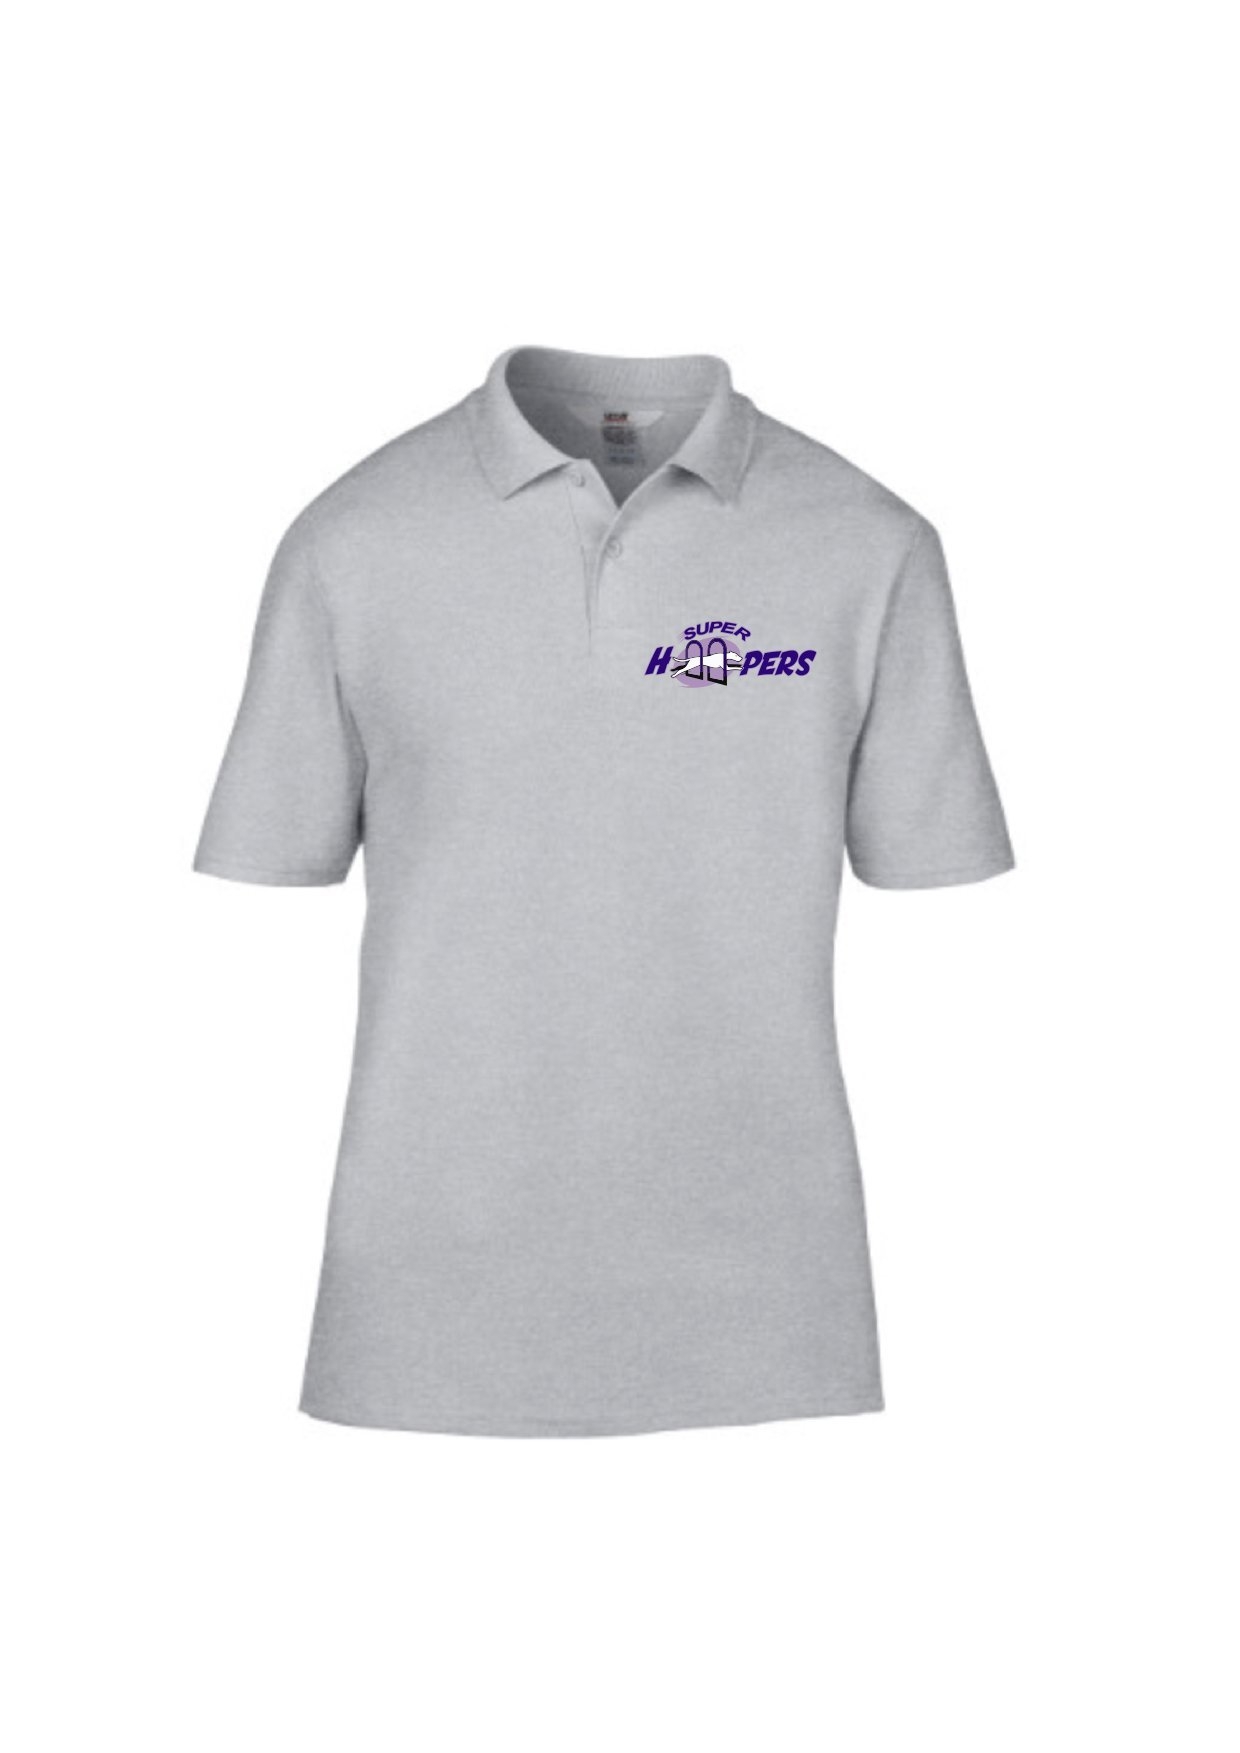 Super Hoopers Polo shirt 2XL – Grey – Pooch